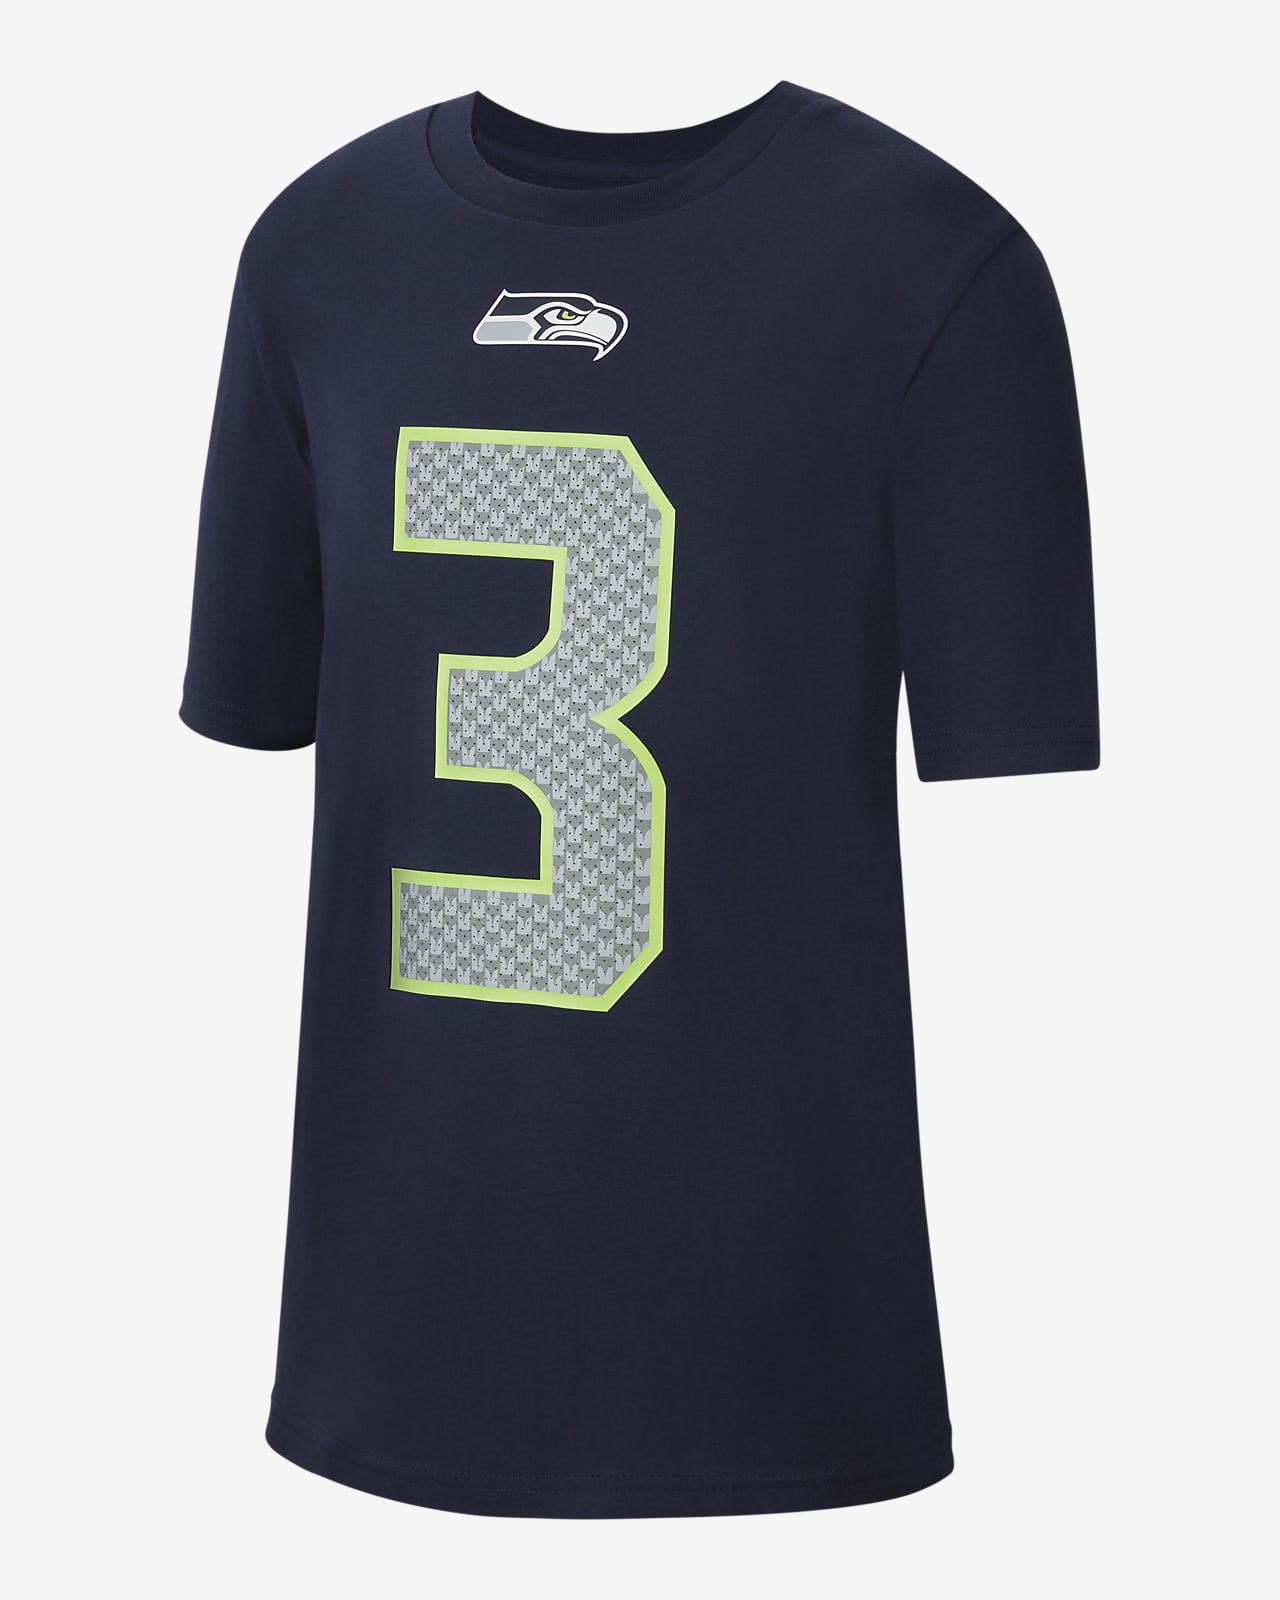 T-shirt Nike (NFL Seattle Seahawks) - Ragazzo/a